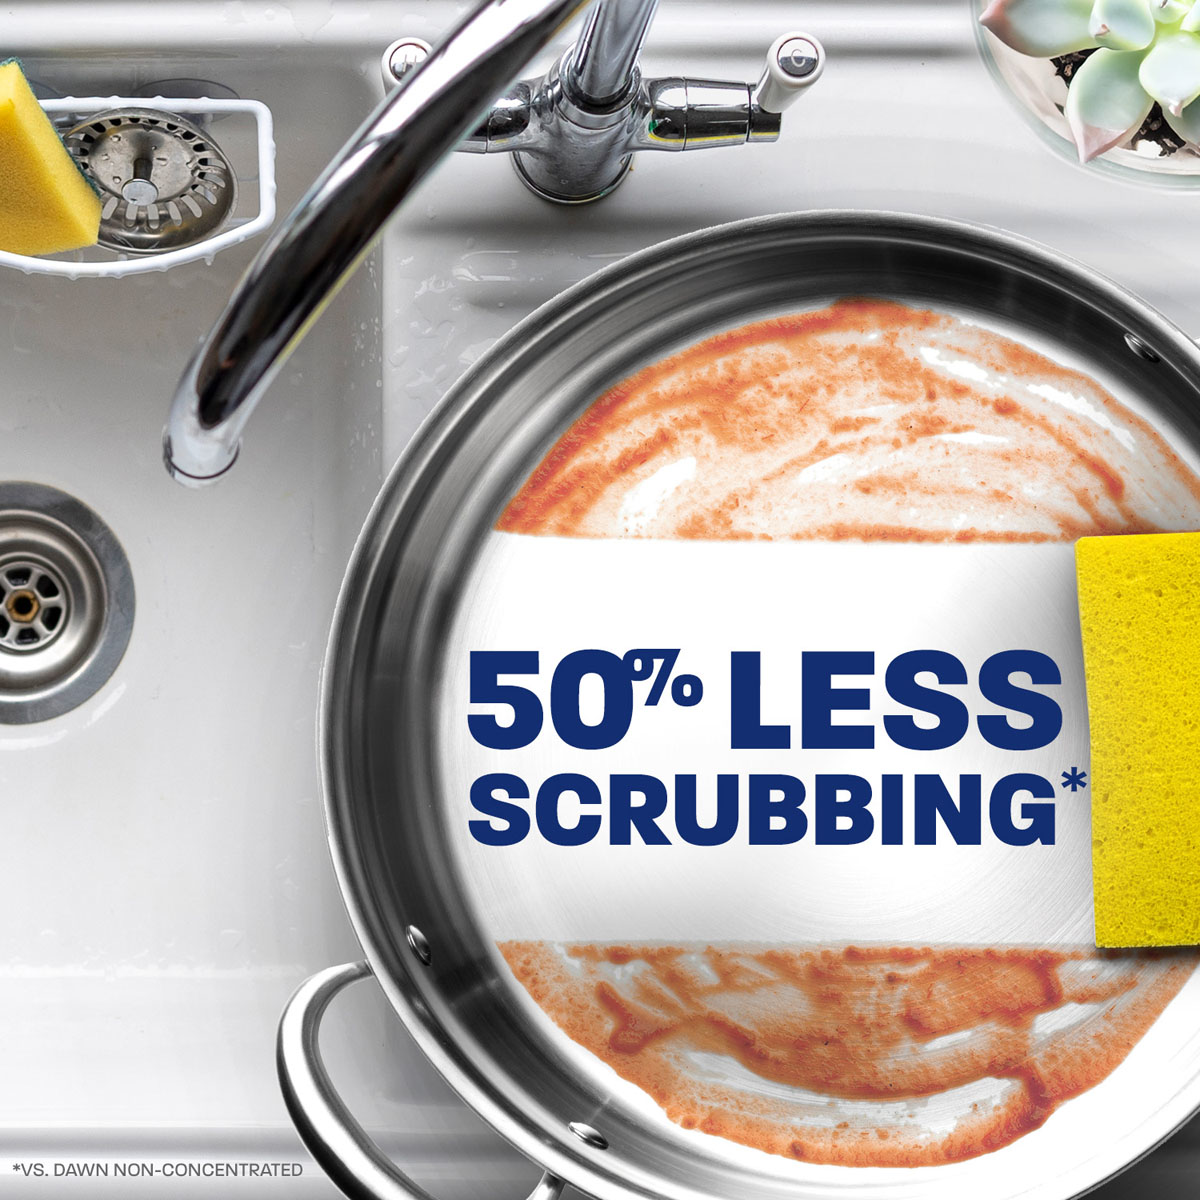 50% less scrubbing